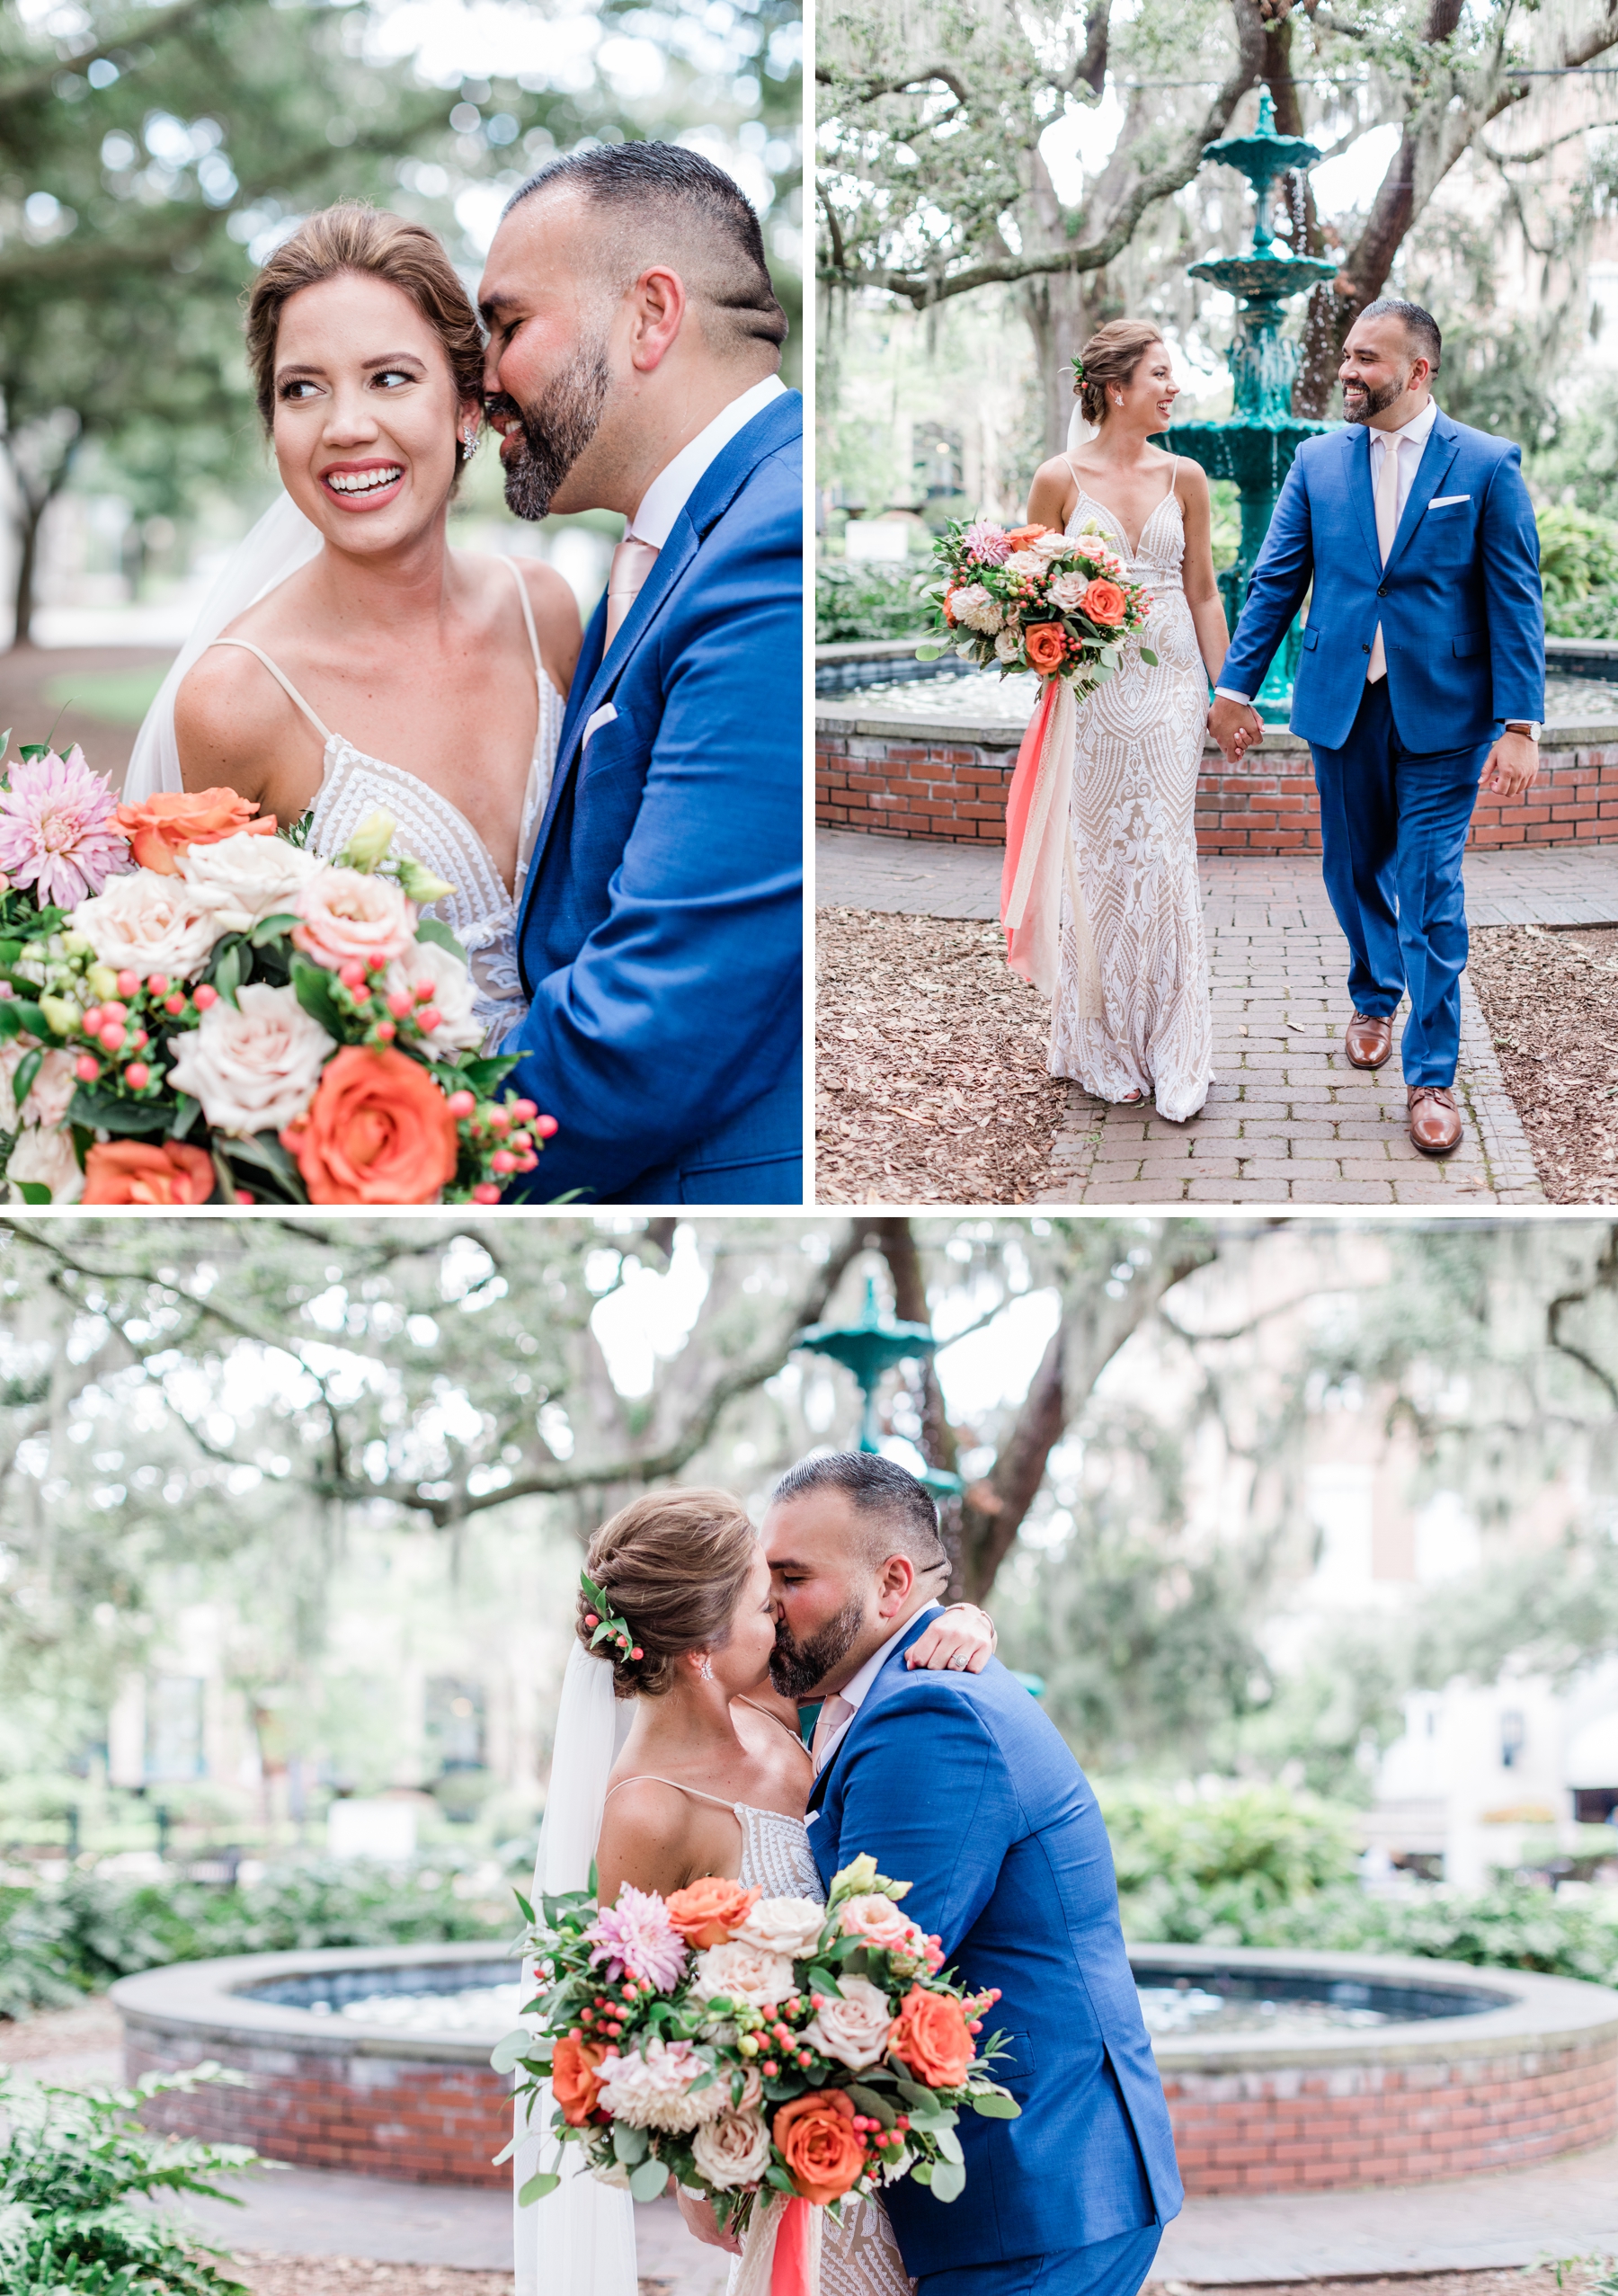 Emma and Steve’s summer elopement in Historic Savannah